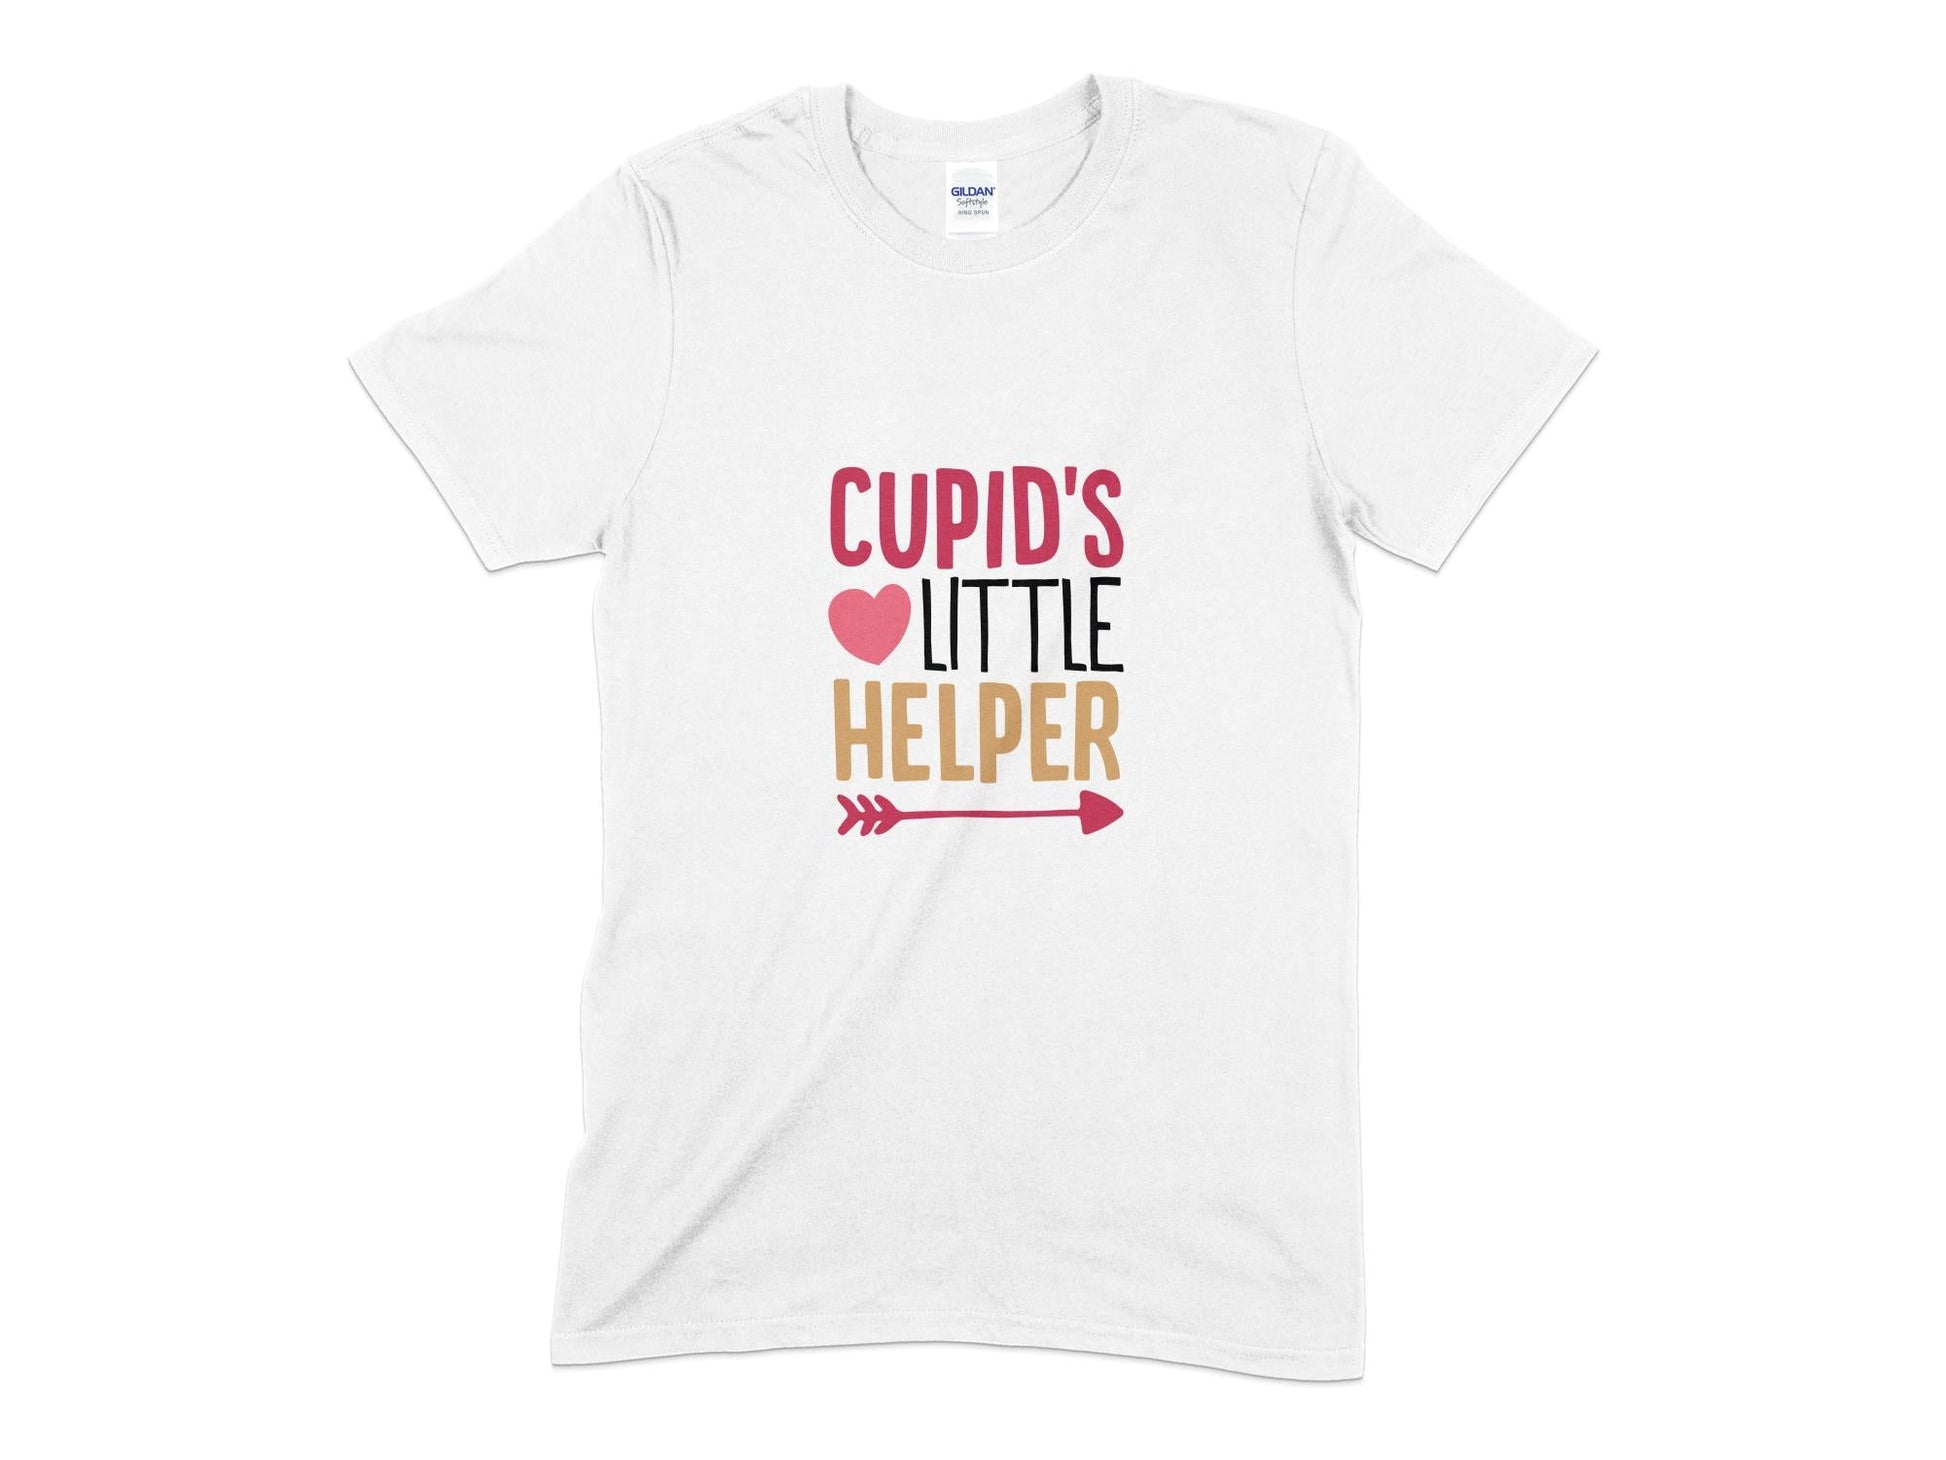 Cupids little helper Mens womens unisex t-shirt - Premium t-shirt from MyDesigns - Just $21.95! Shop now at Lees Krazy Teez